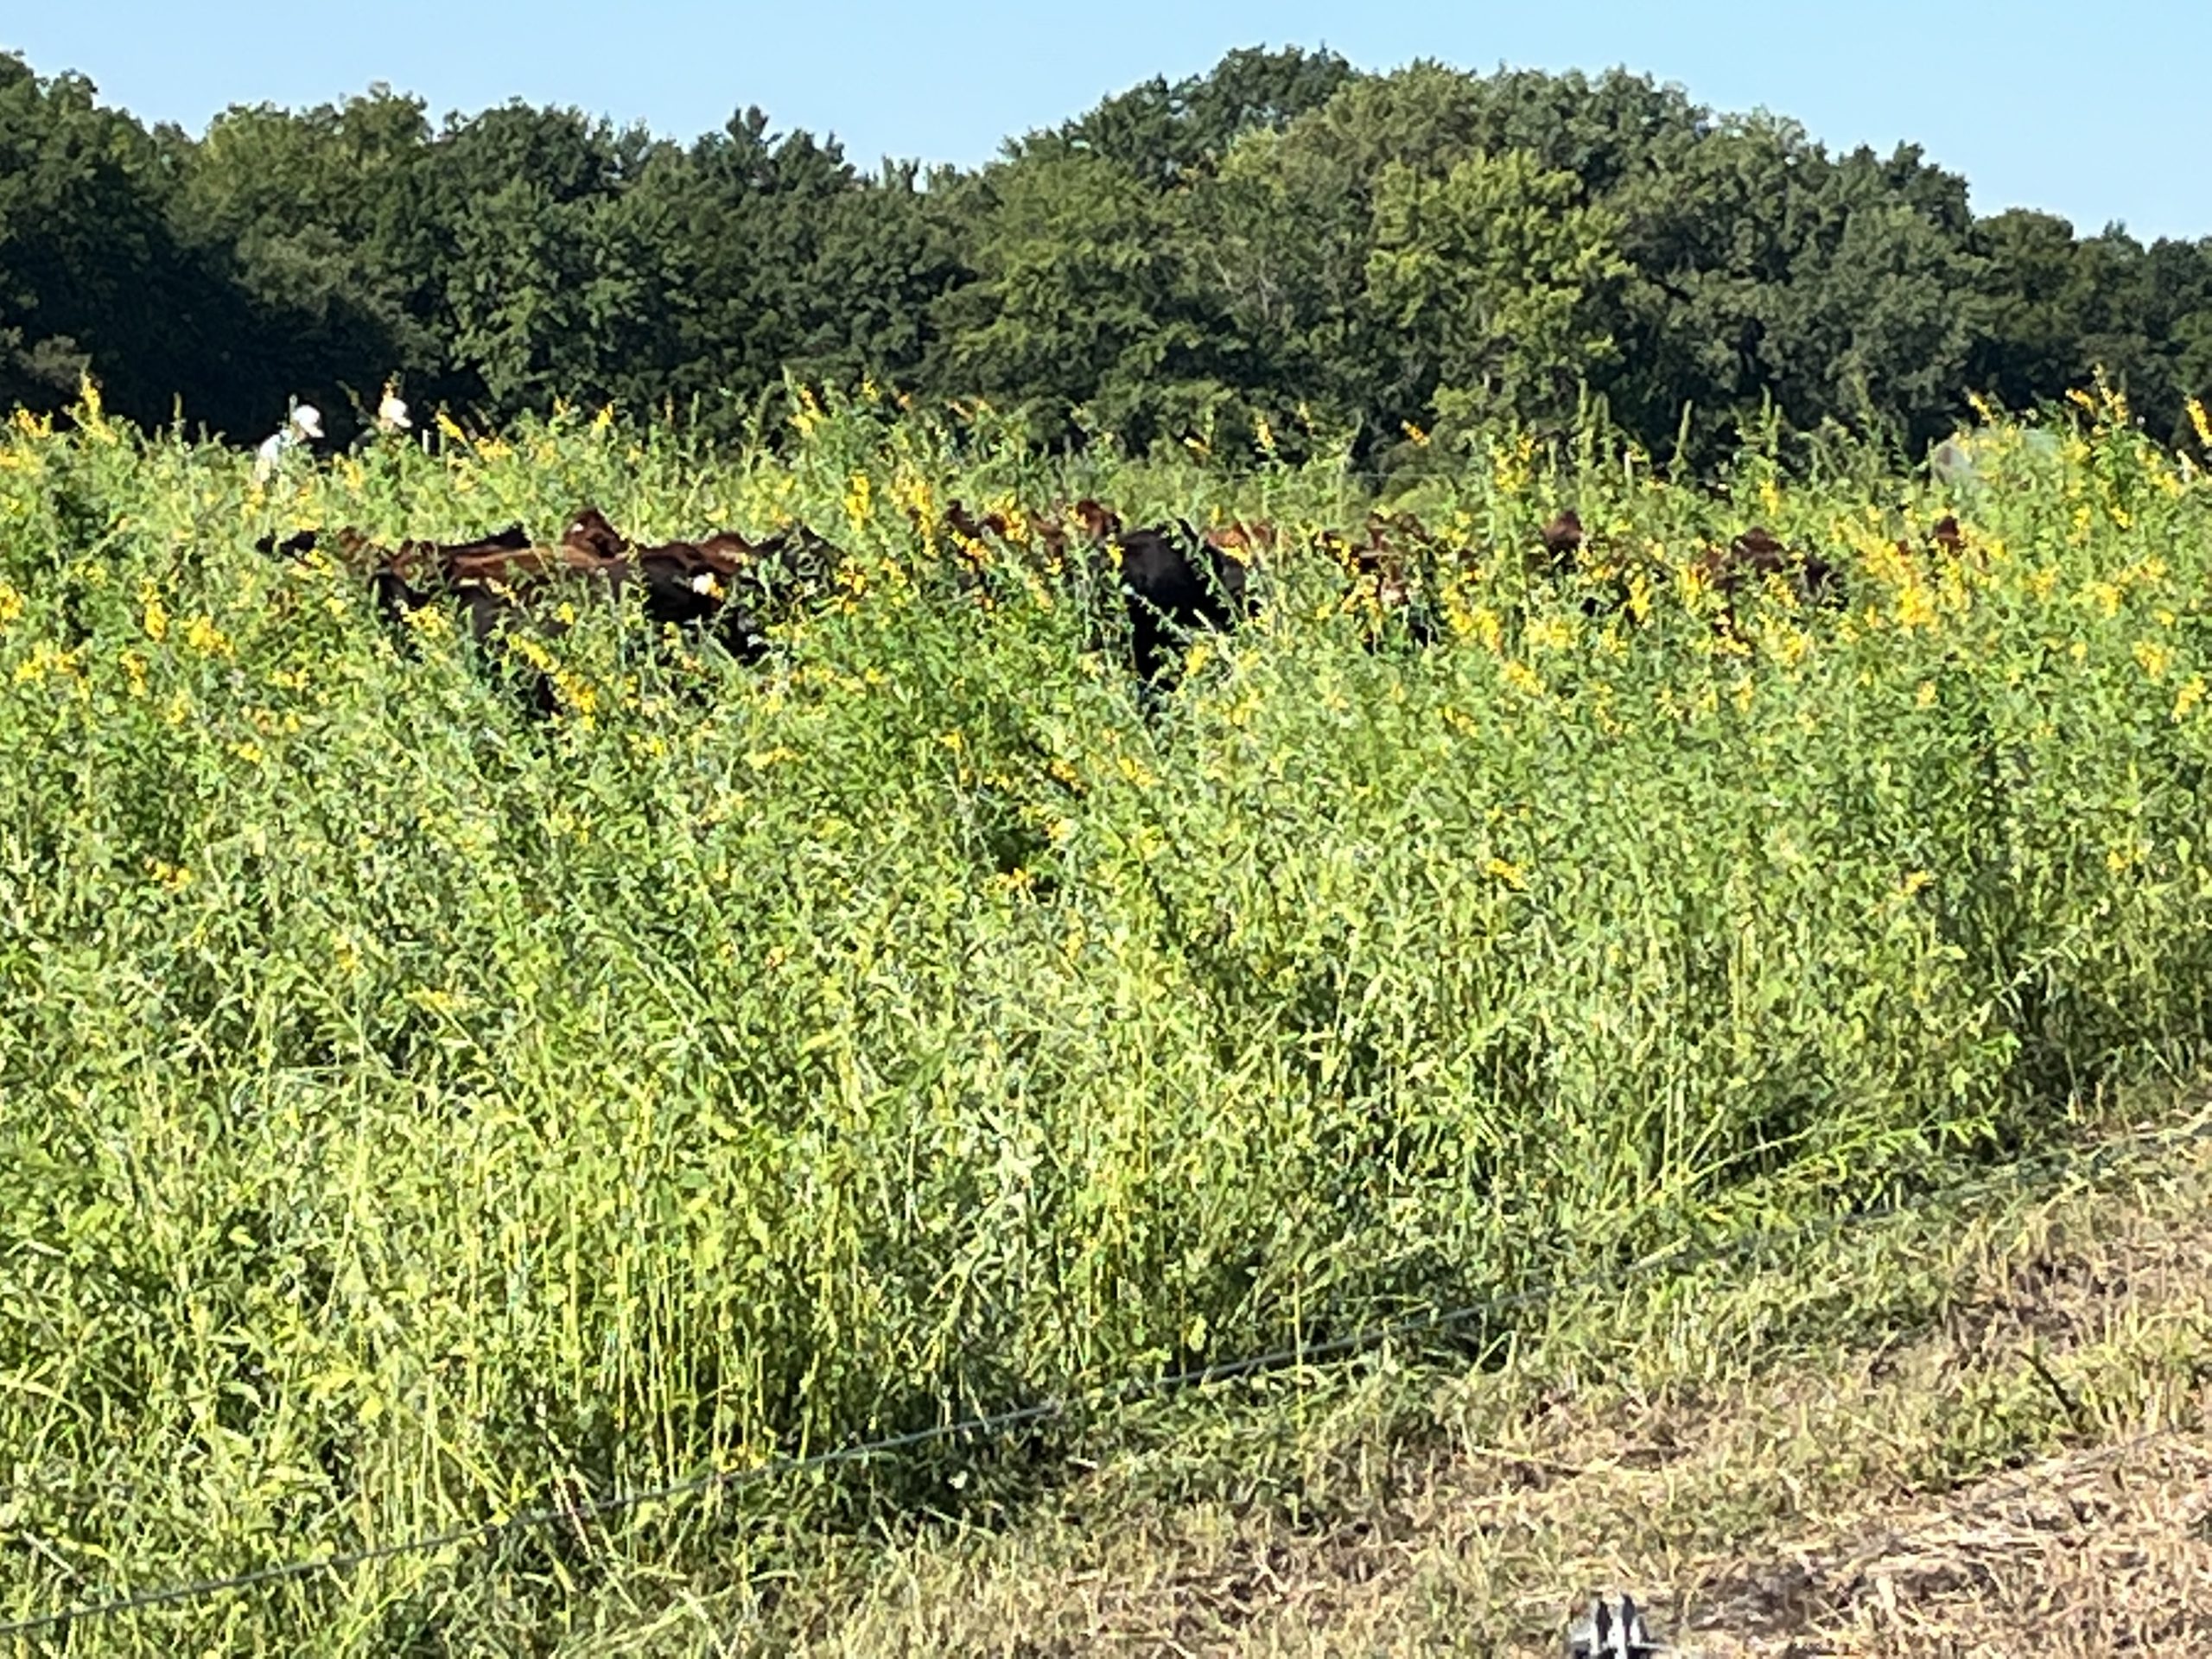 Cows grazing sunn hemp at MU Greenley Research Farm in northeastern Missouri. Photo by Harley Naumann.